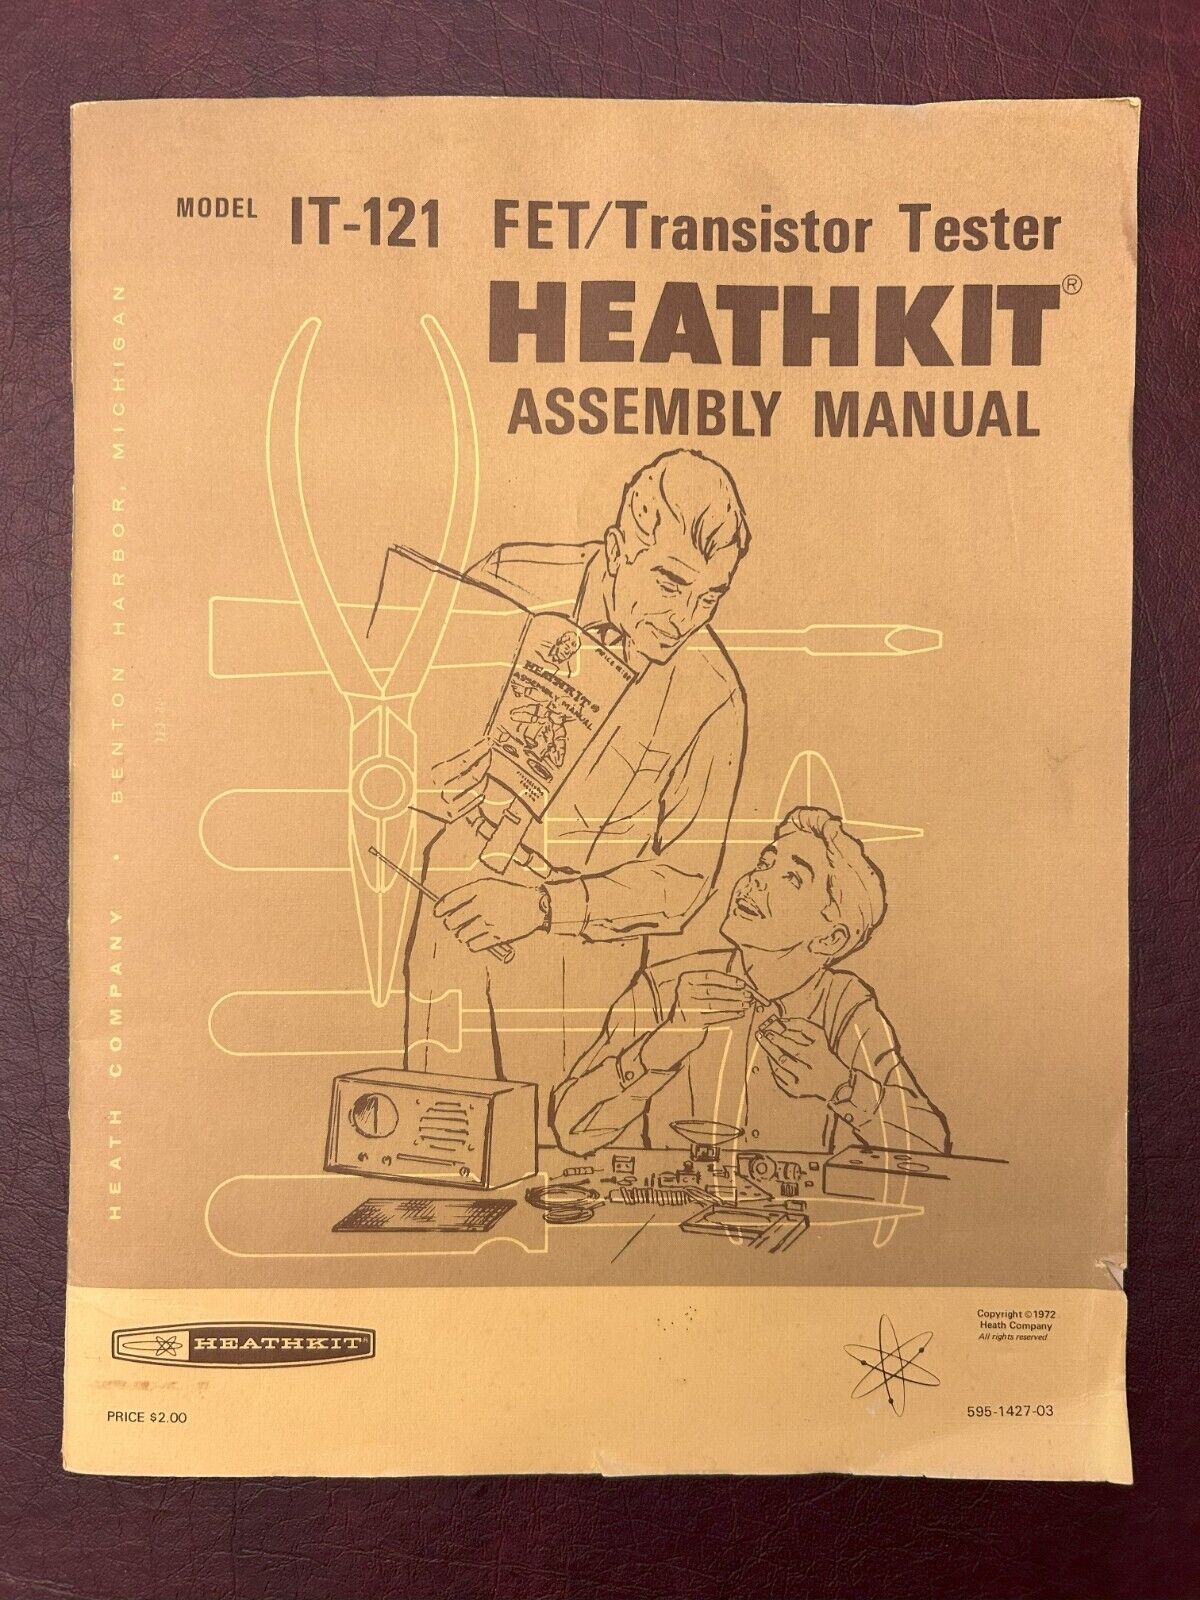 Vintage HeathKit Model IT-121 FET/Transistor Tester Assembly Manual 1972